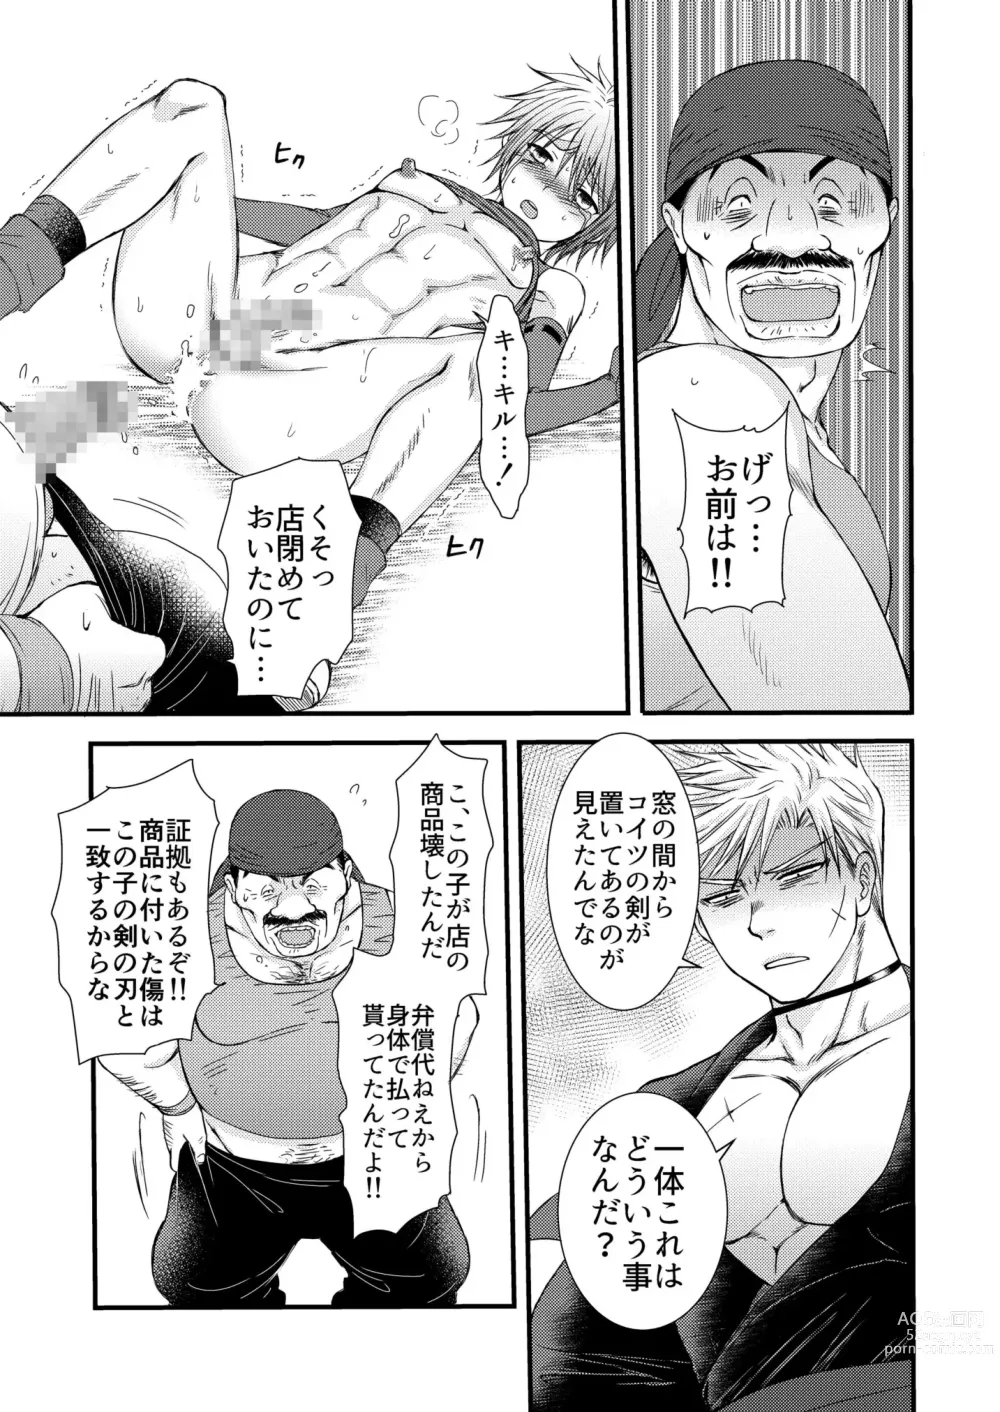 Page 35 of doujinshi Benshoushiro ga Tarinakute